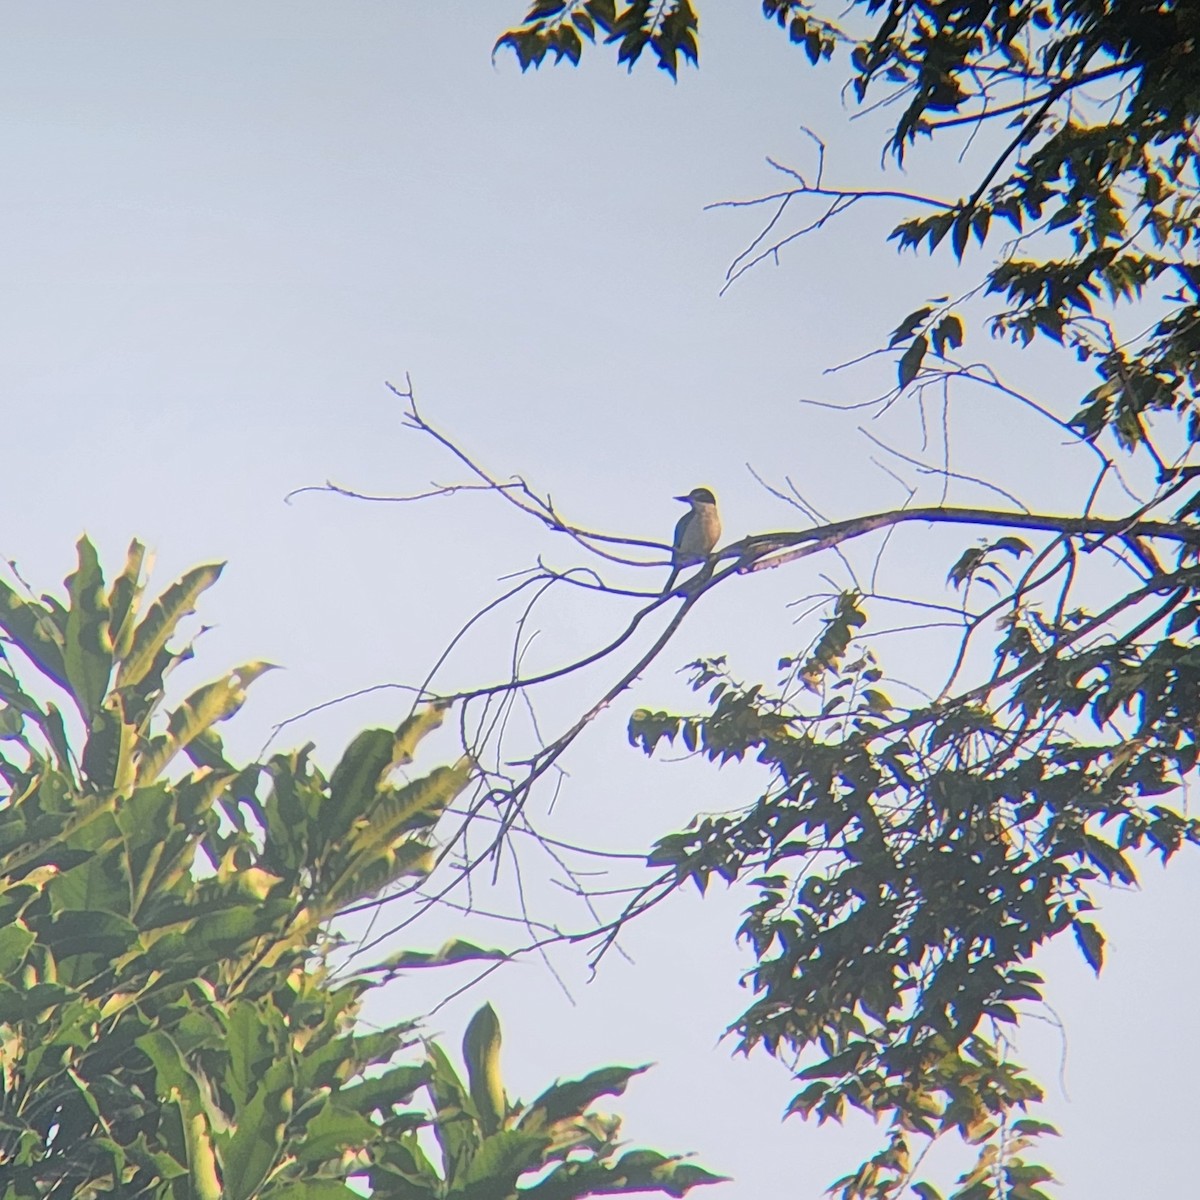 Collared Kingfisher - Octavianti Puspita